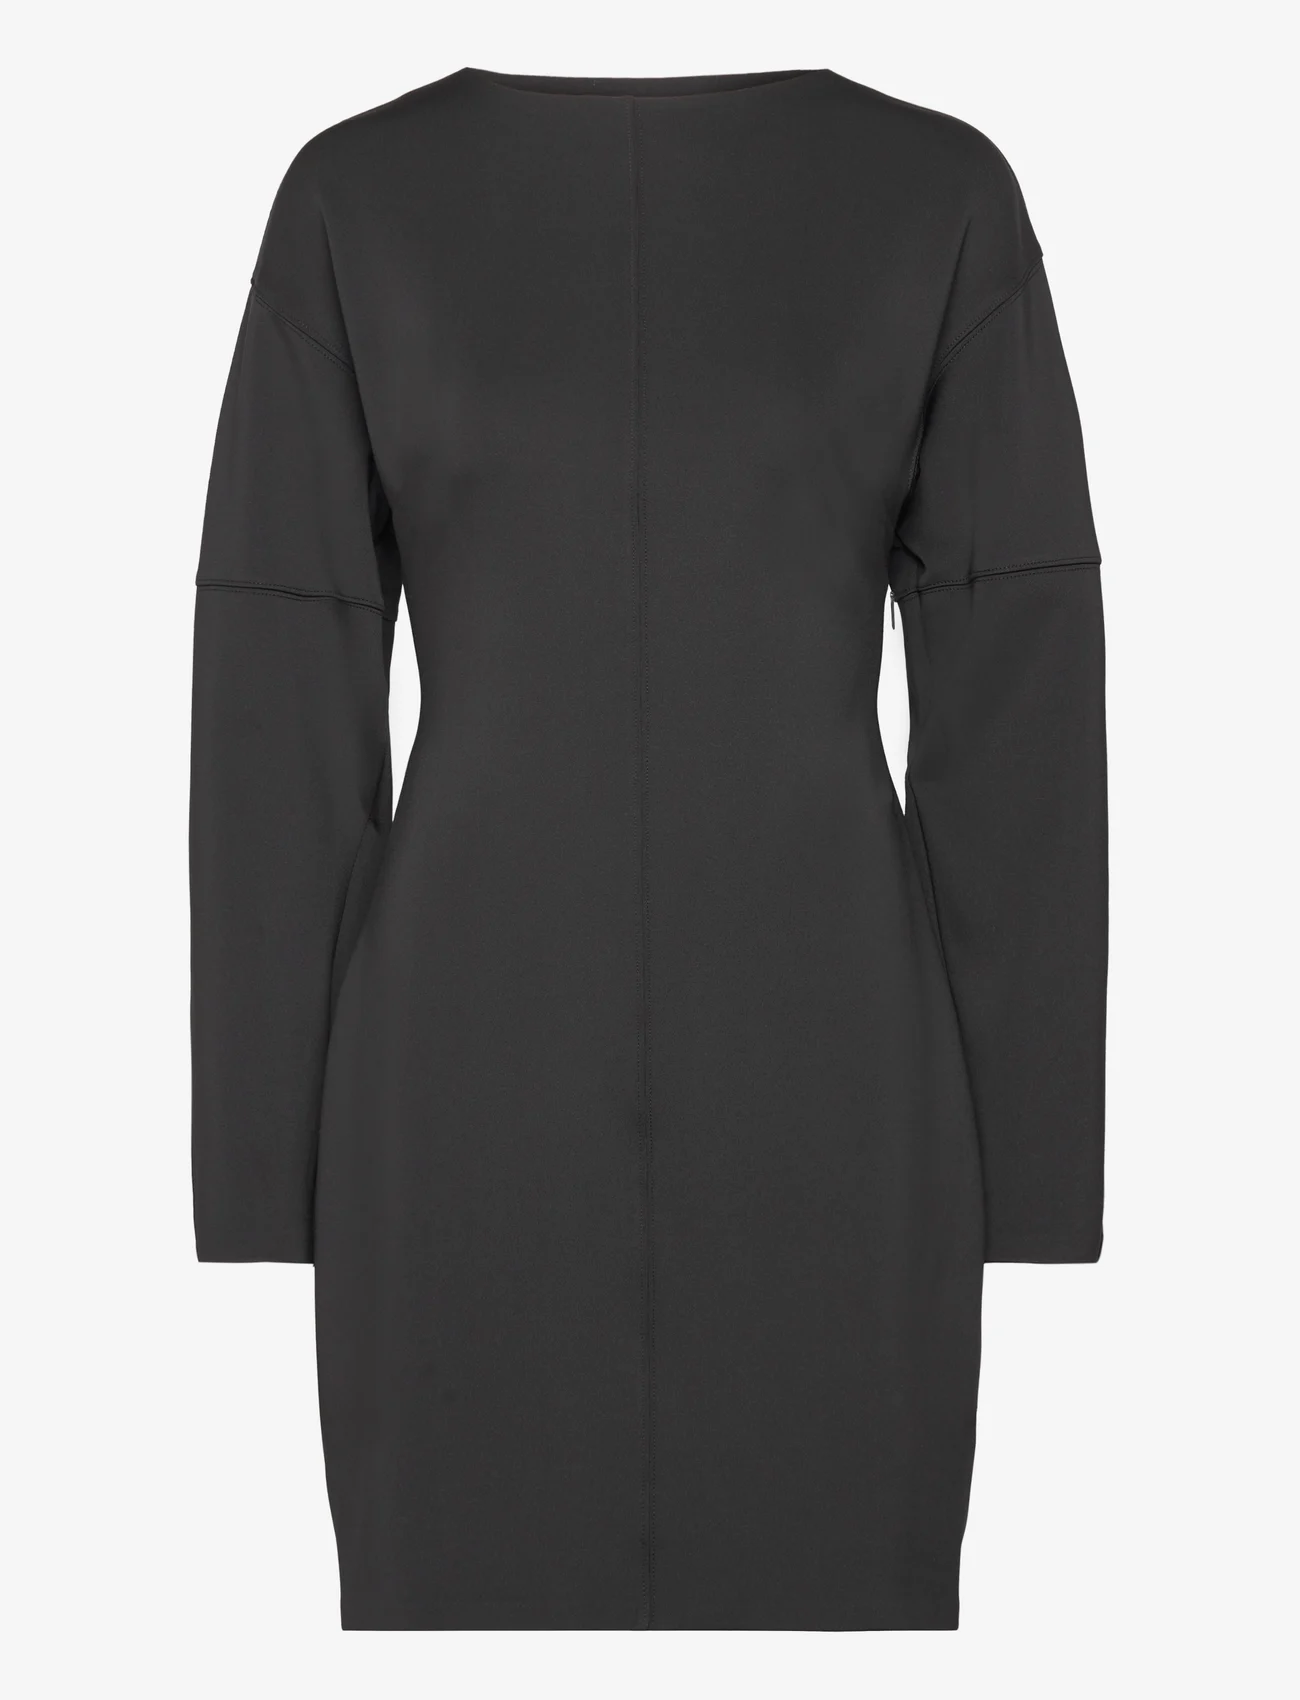 Calvin Klein - TECHNICAL KNIT LS FITTED DRESS - stramme kjoler - ck black - 0